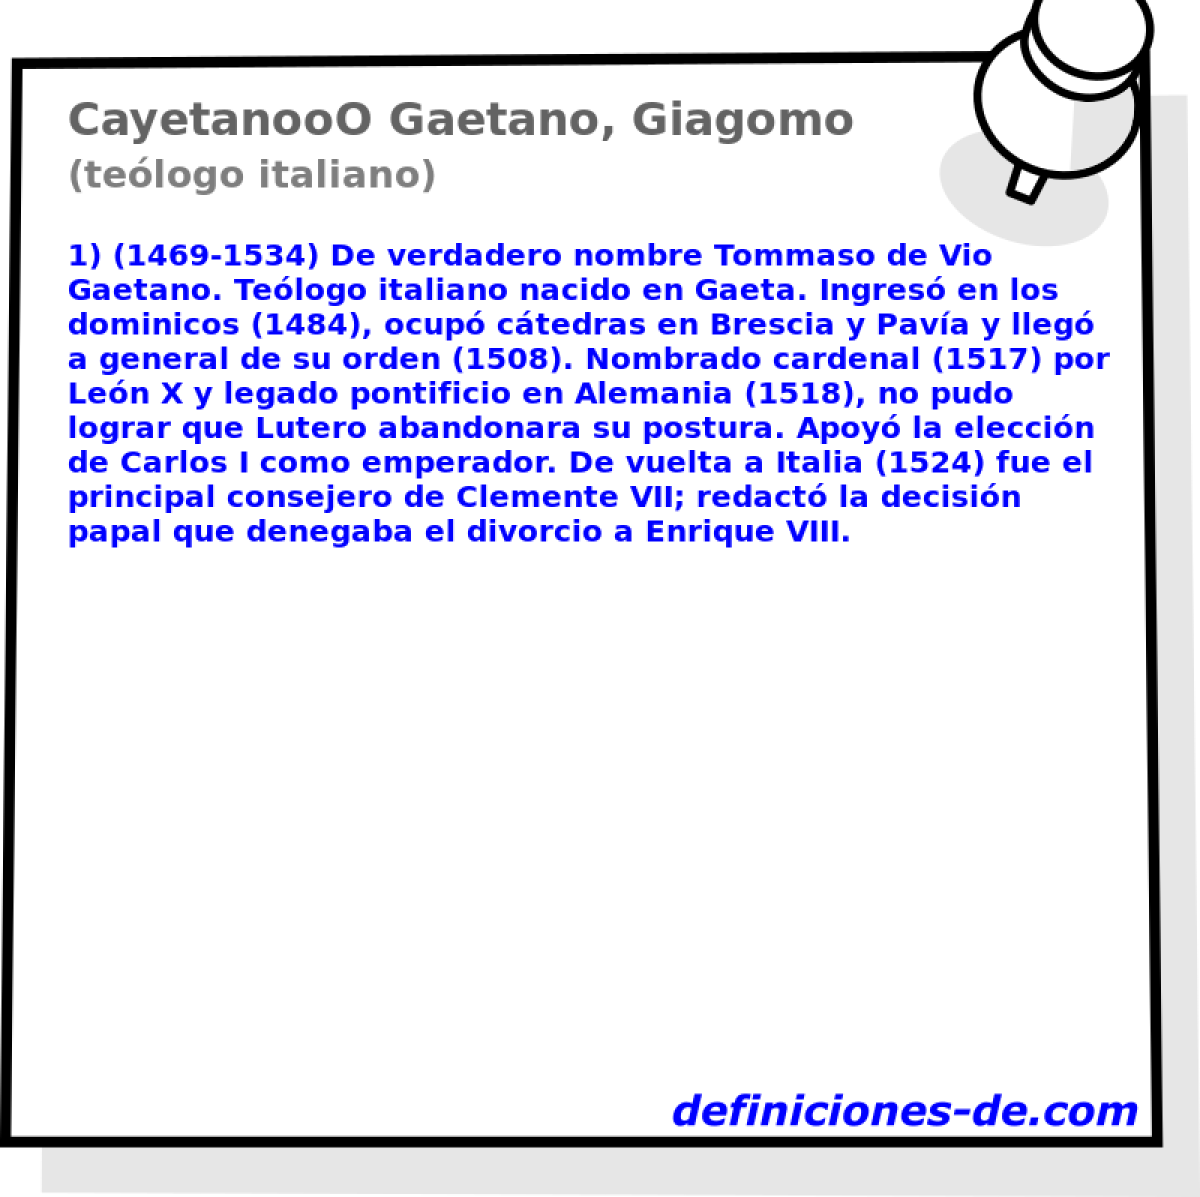 CayetanooO Gaetano, Giagomo (telogo italiano)